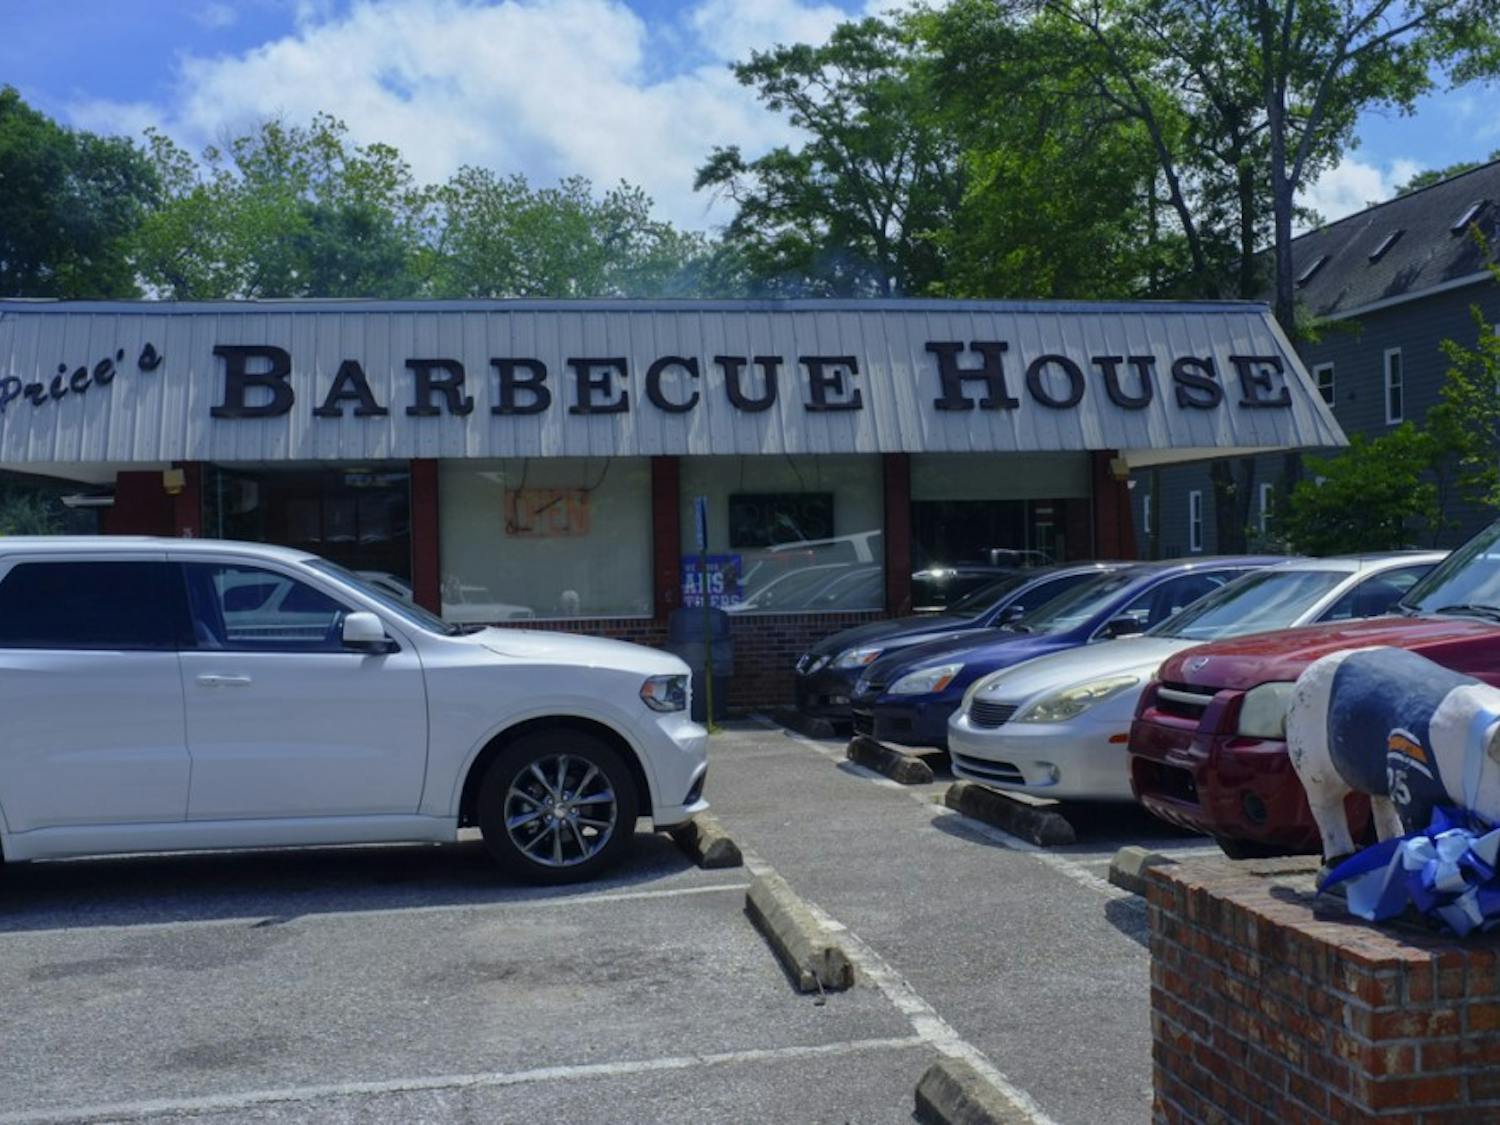 Price's Barbecue House located at 345 S College St in Auburn, AL.